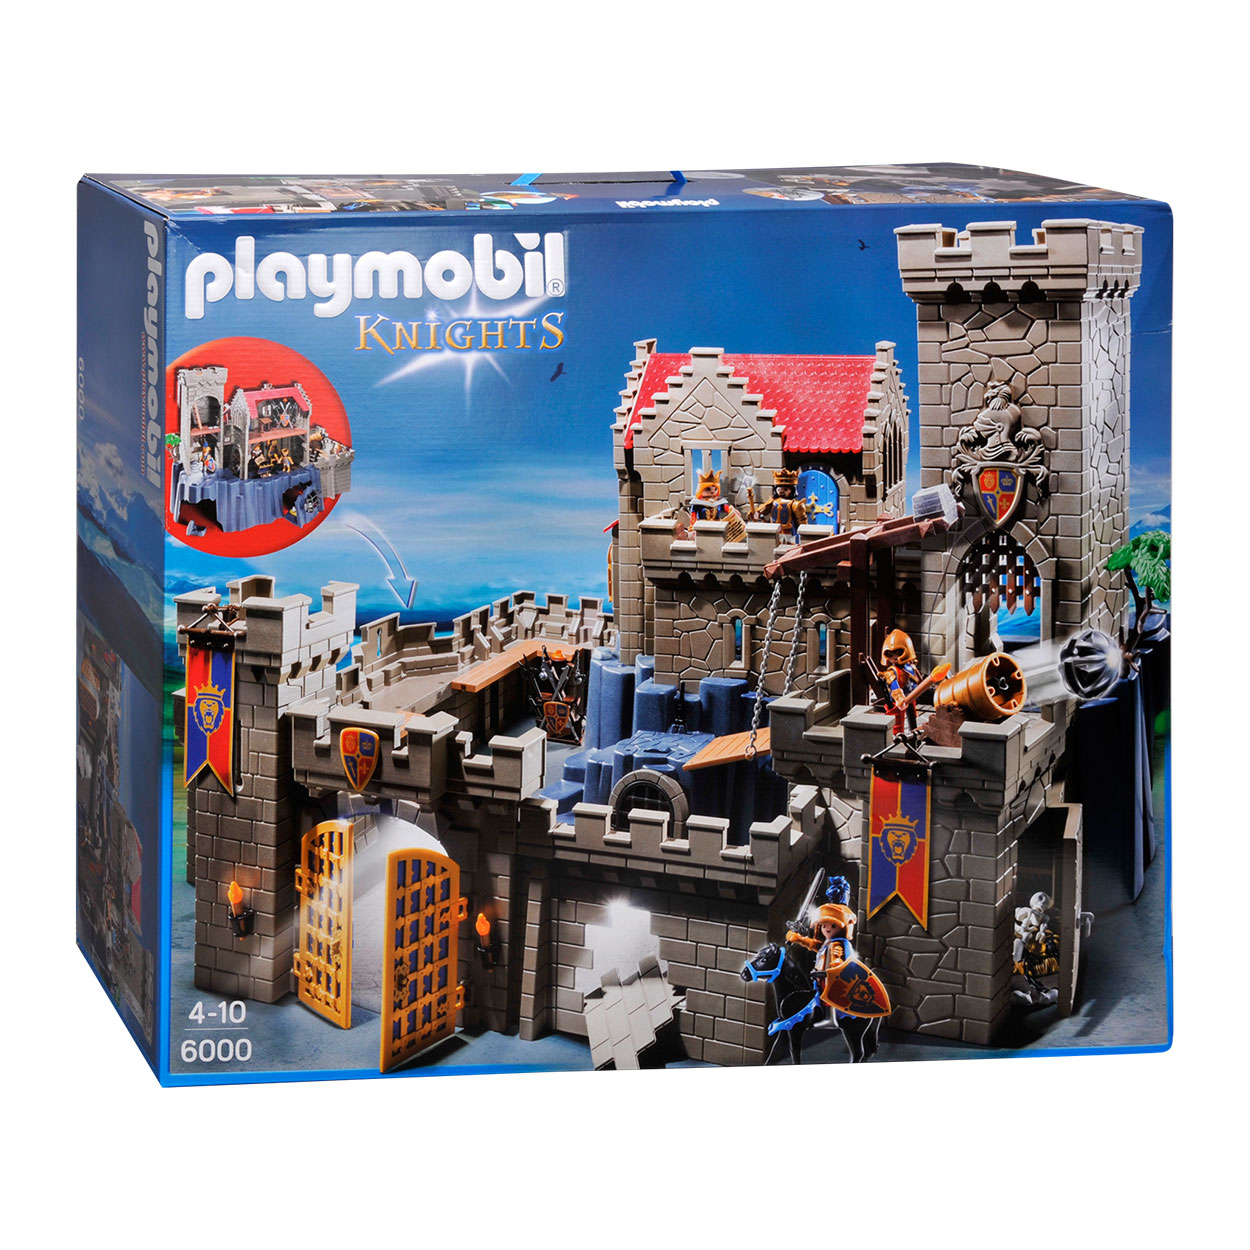 Playmobil 6000 Koningskasteel Leeuwenridders Thimble Toys